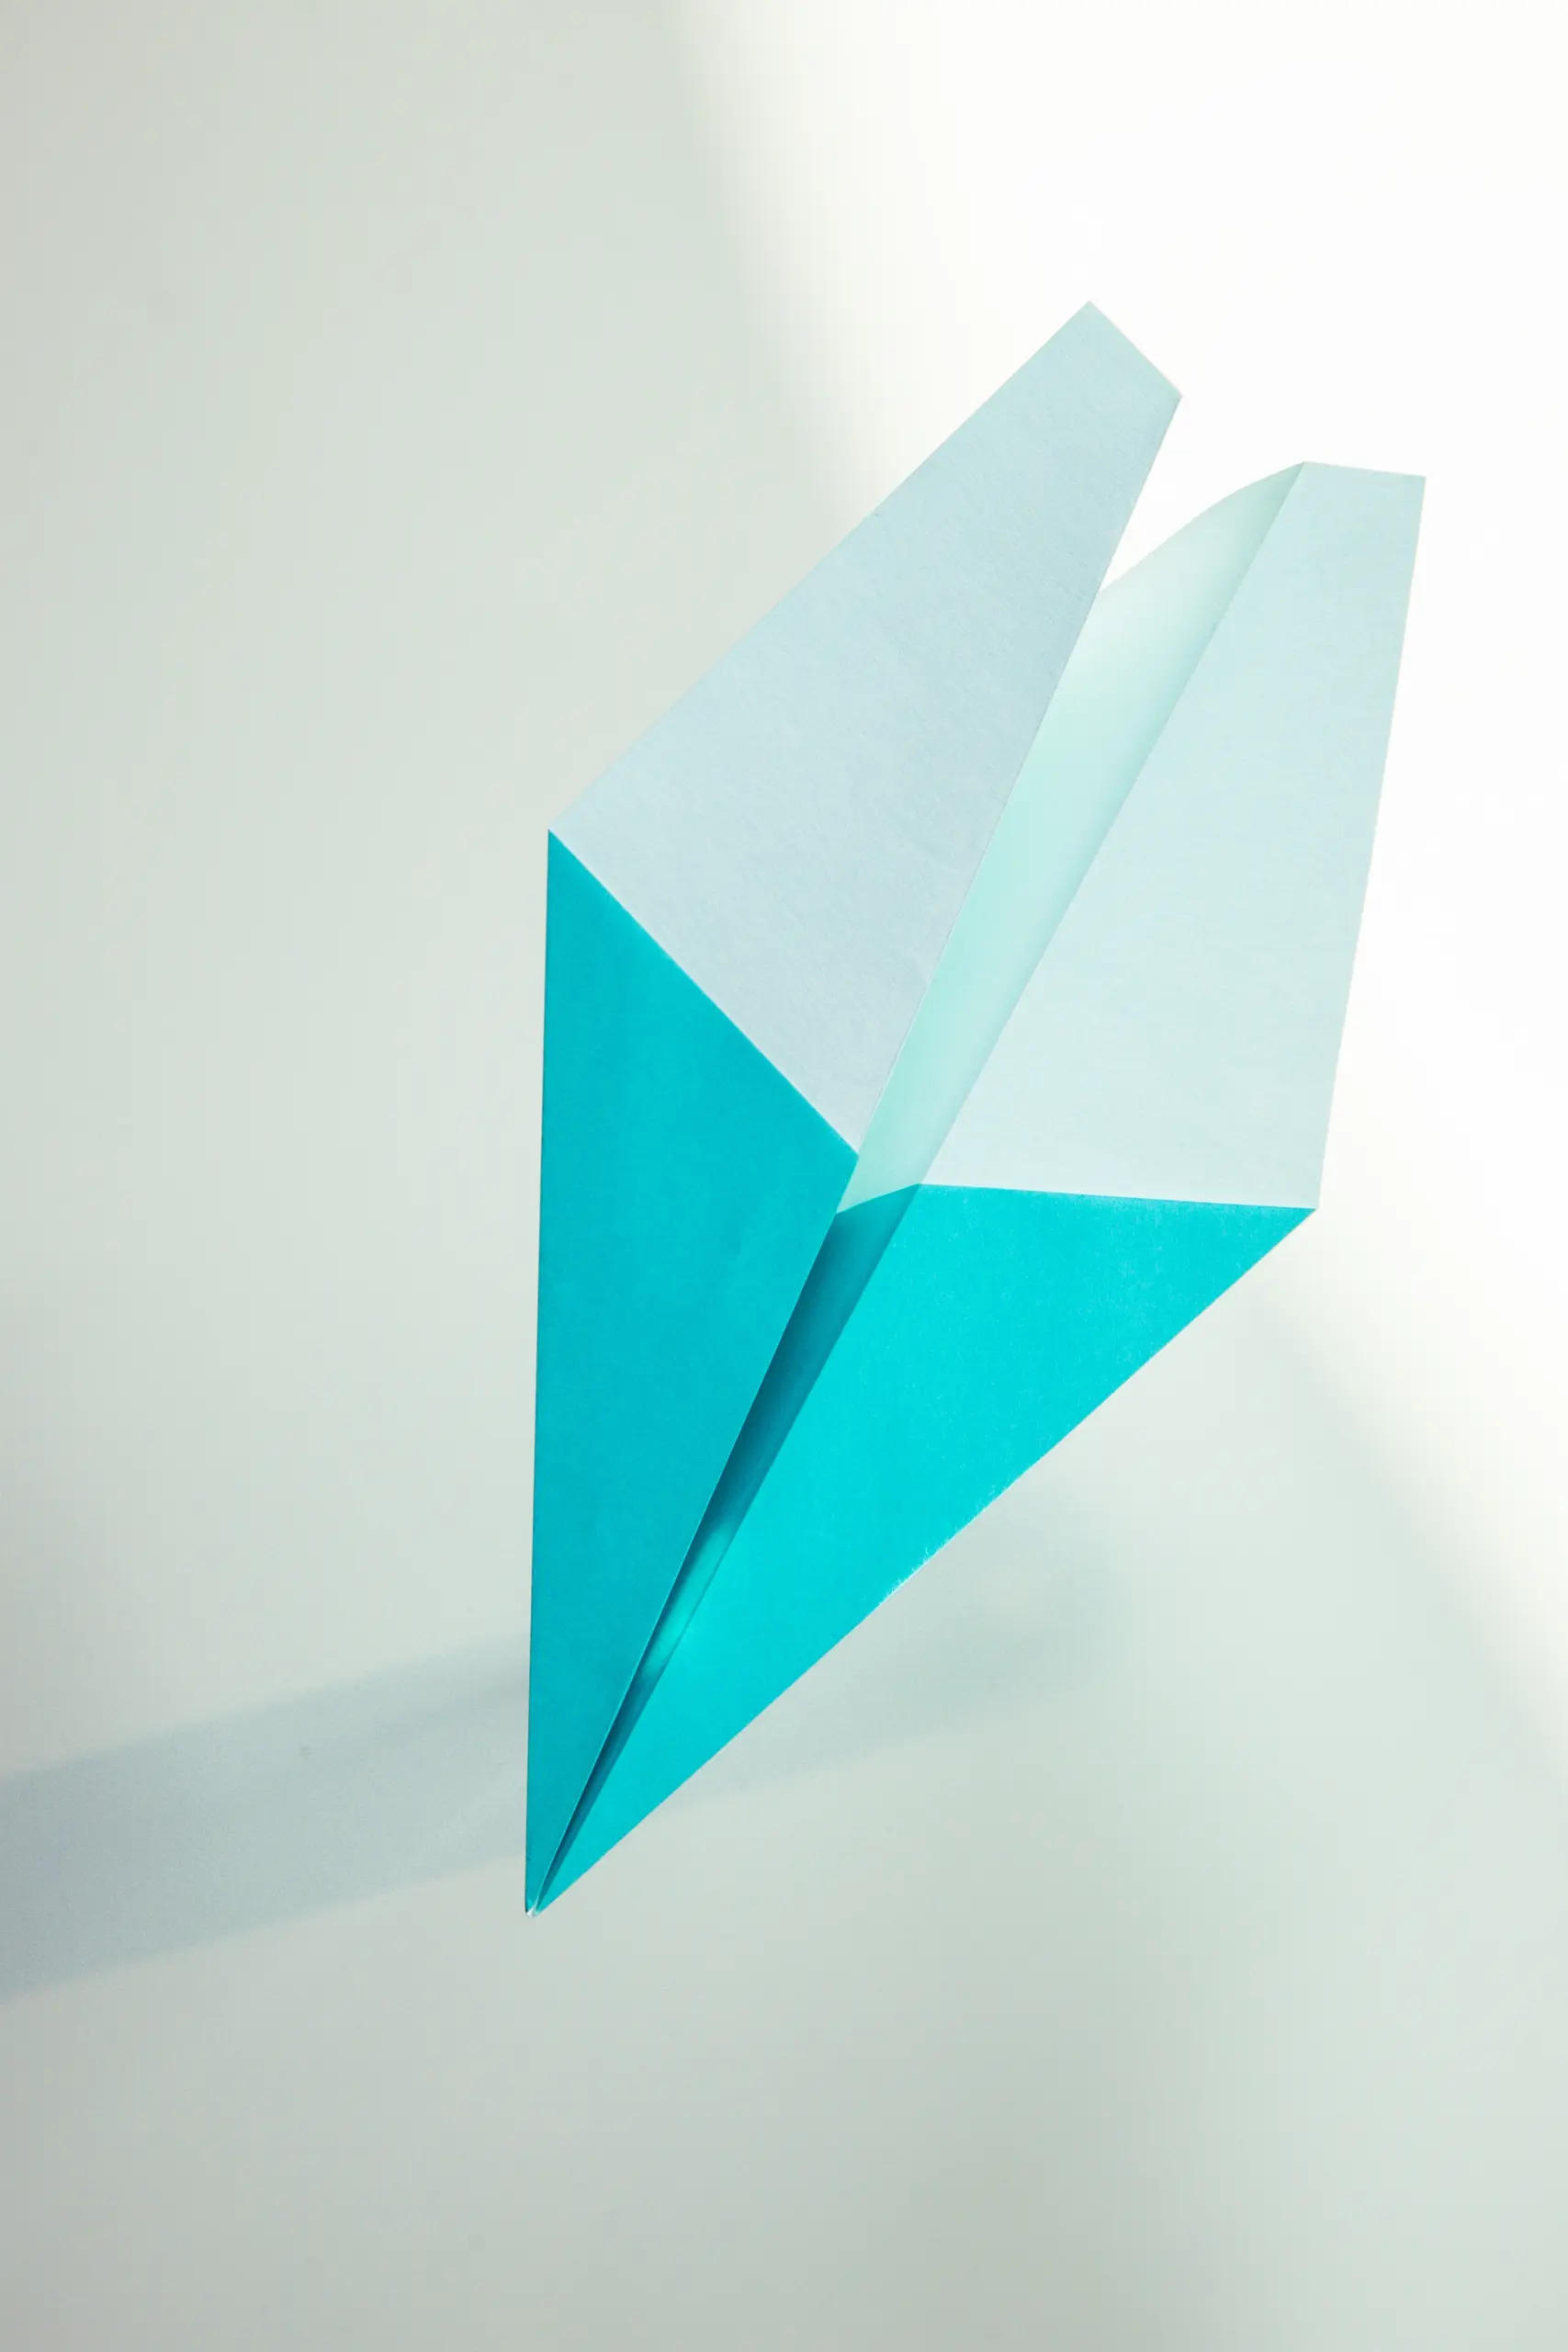 origami plane